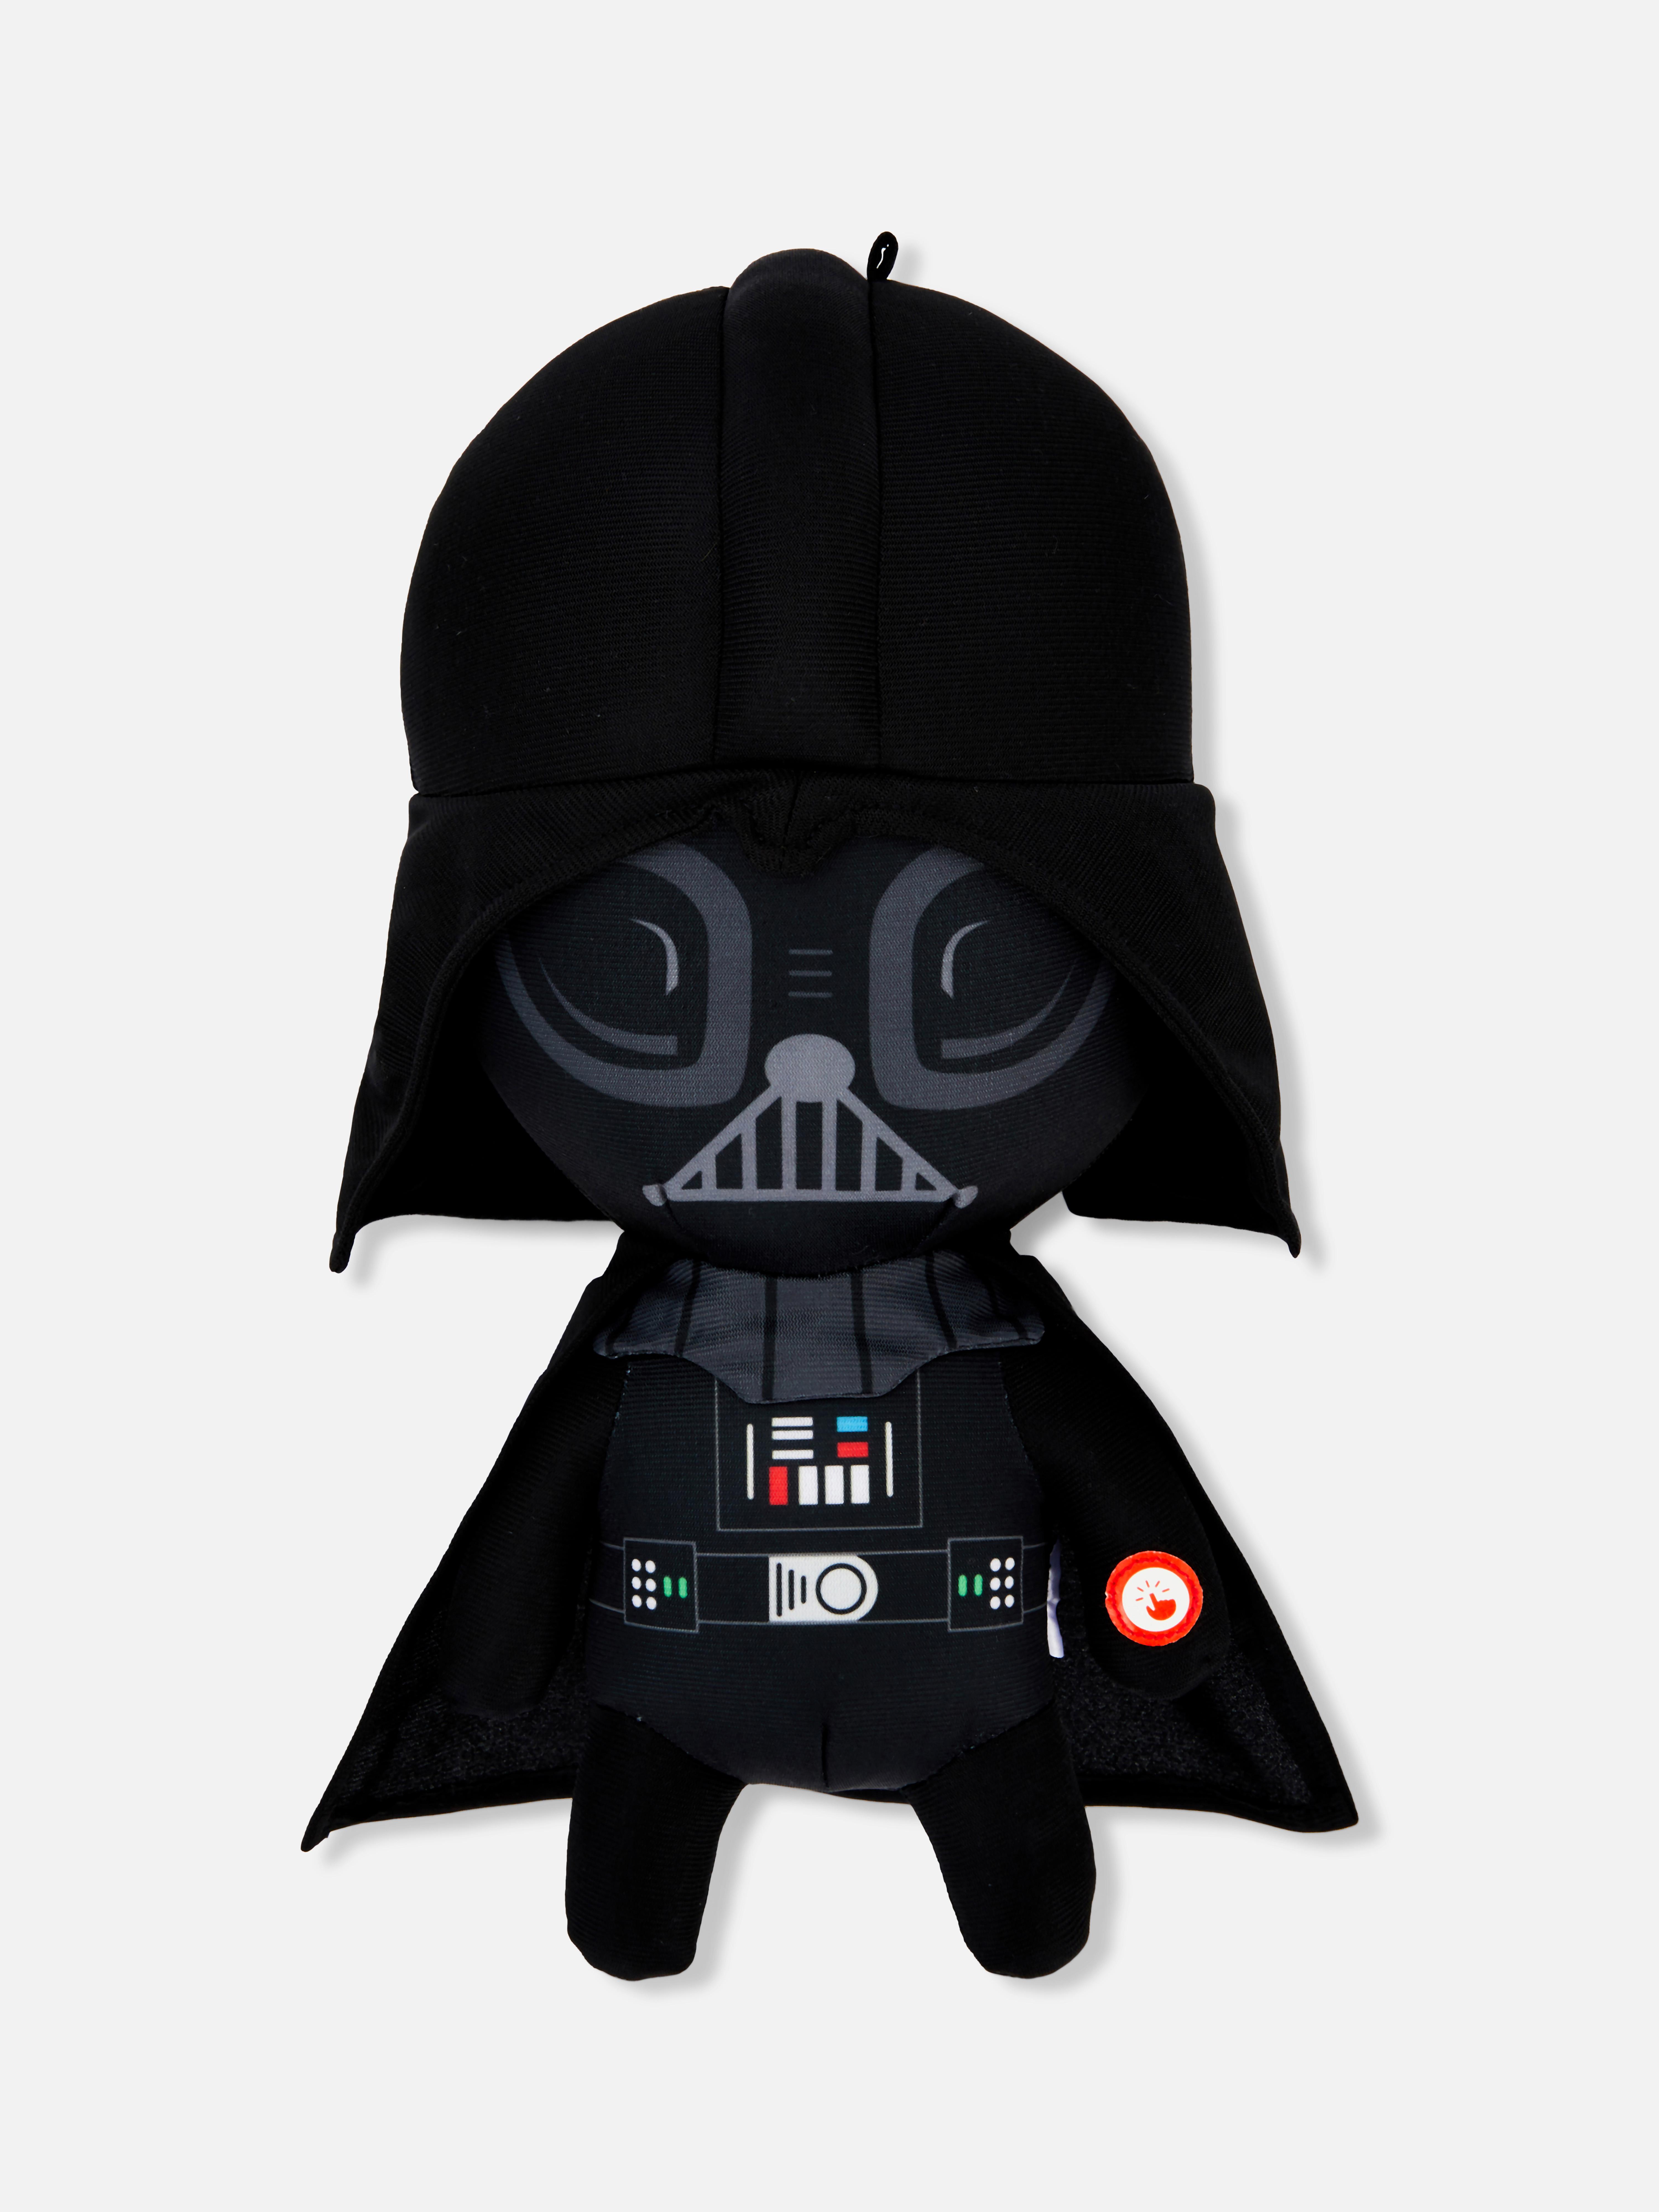 Darth Vader Plush Toy Black